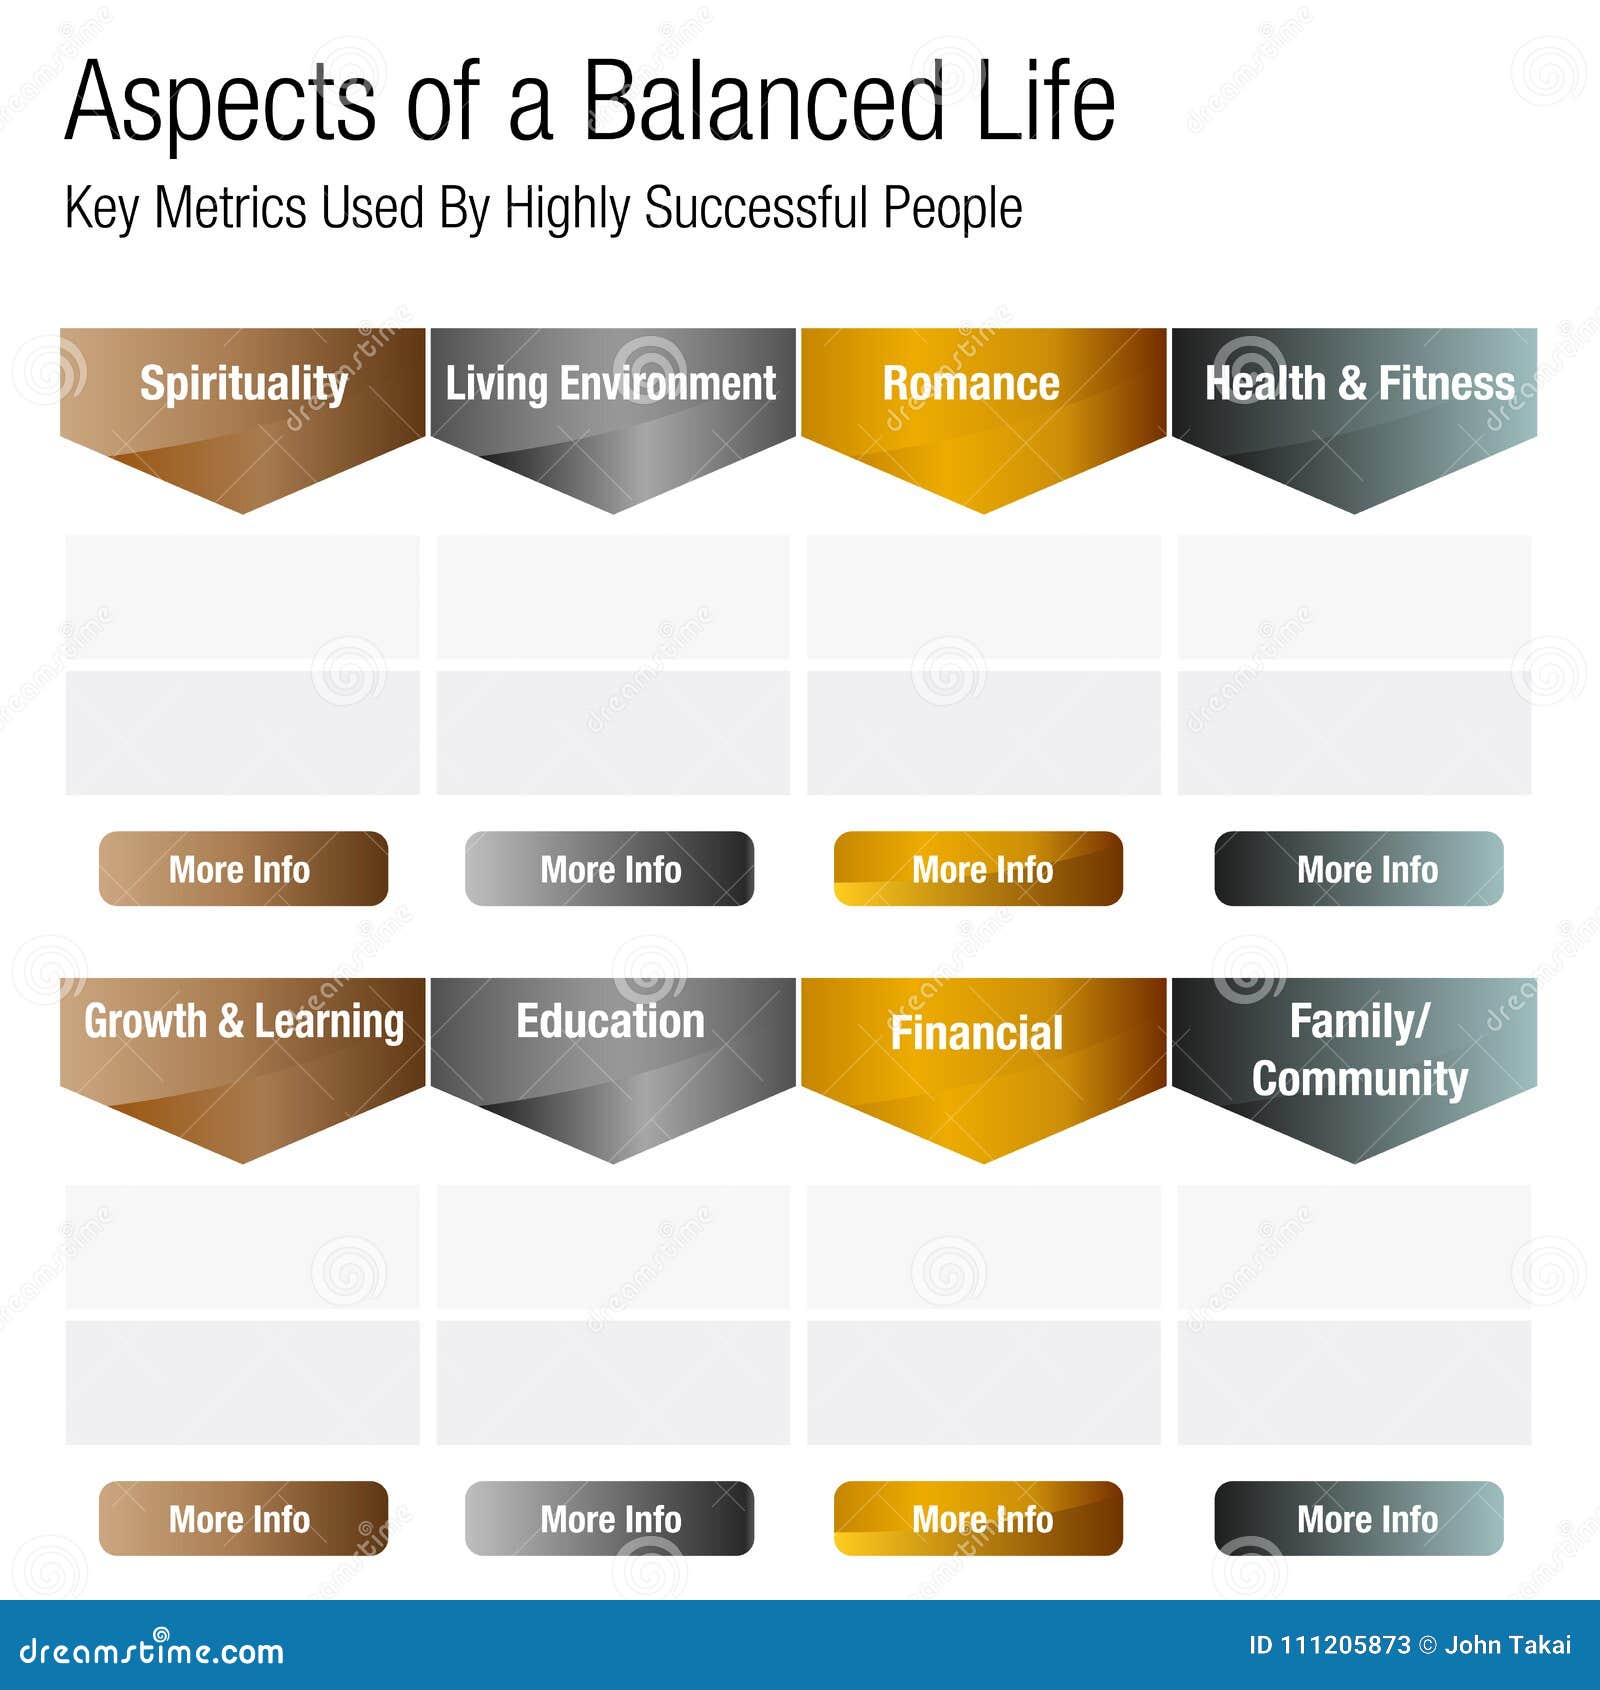 Life Chart 1